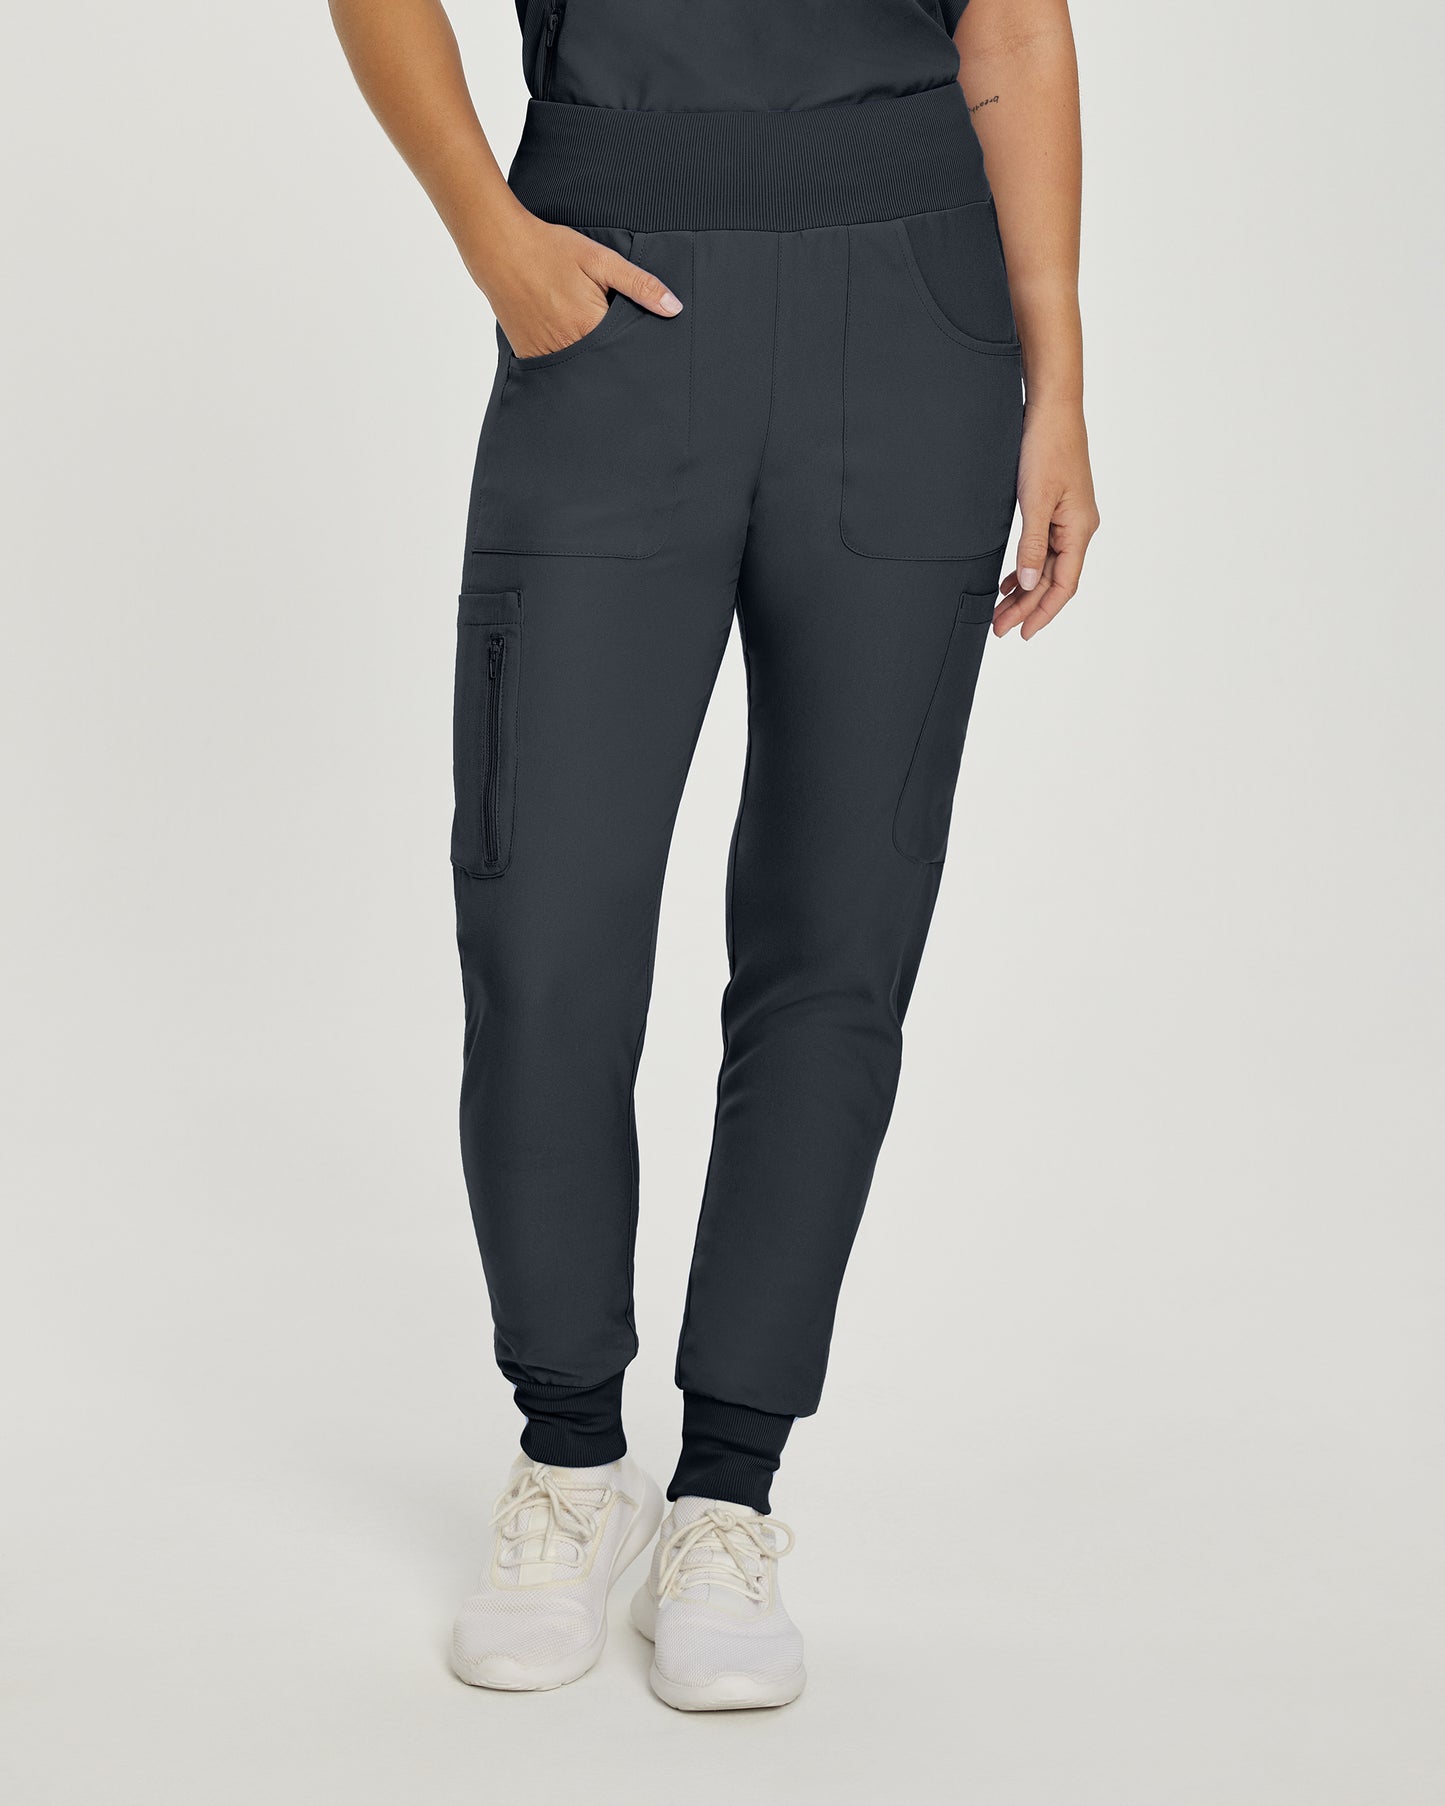 Women's jogger pants - FORWARD - L401P short